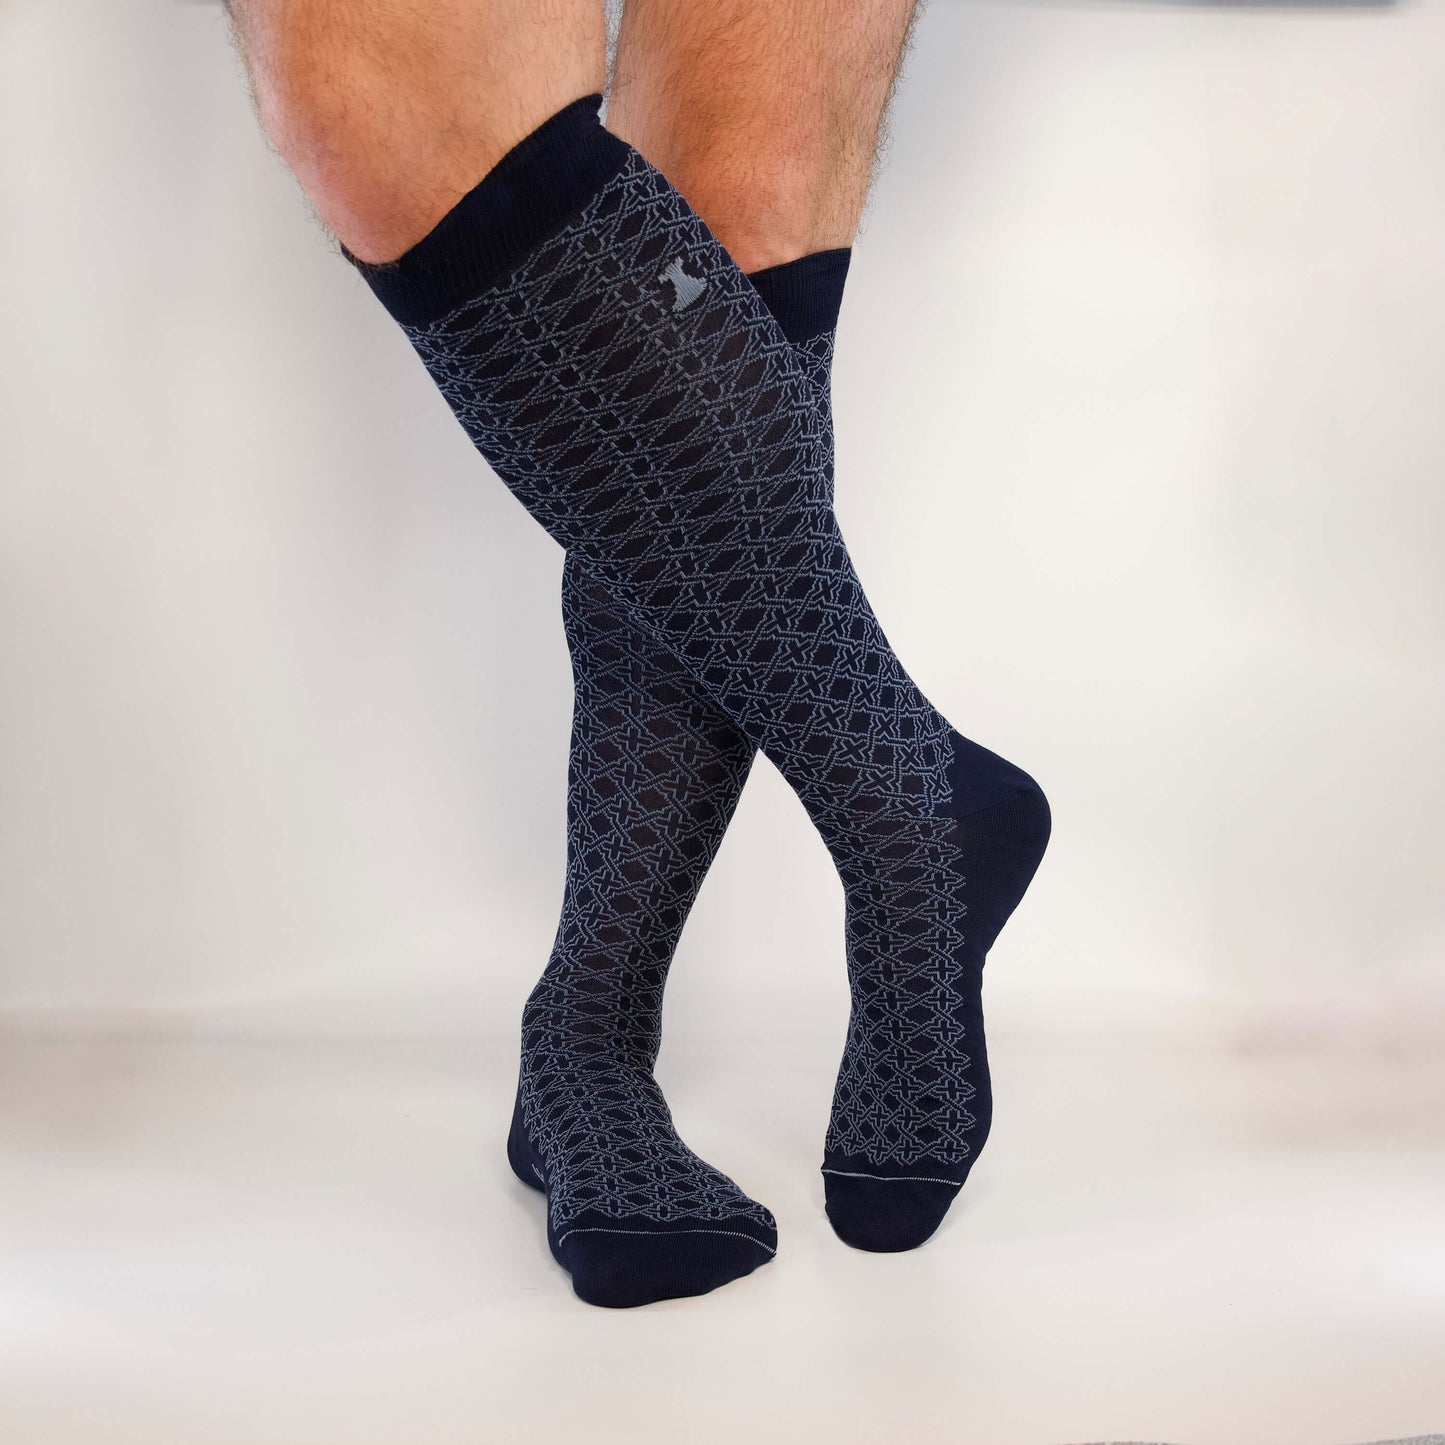 Napoleon - 1820 Empire style knee high socks